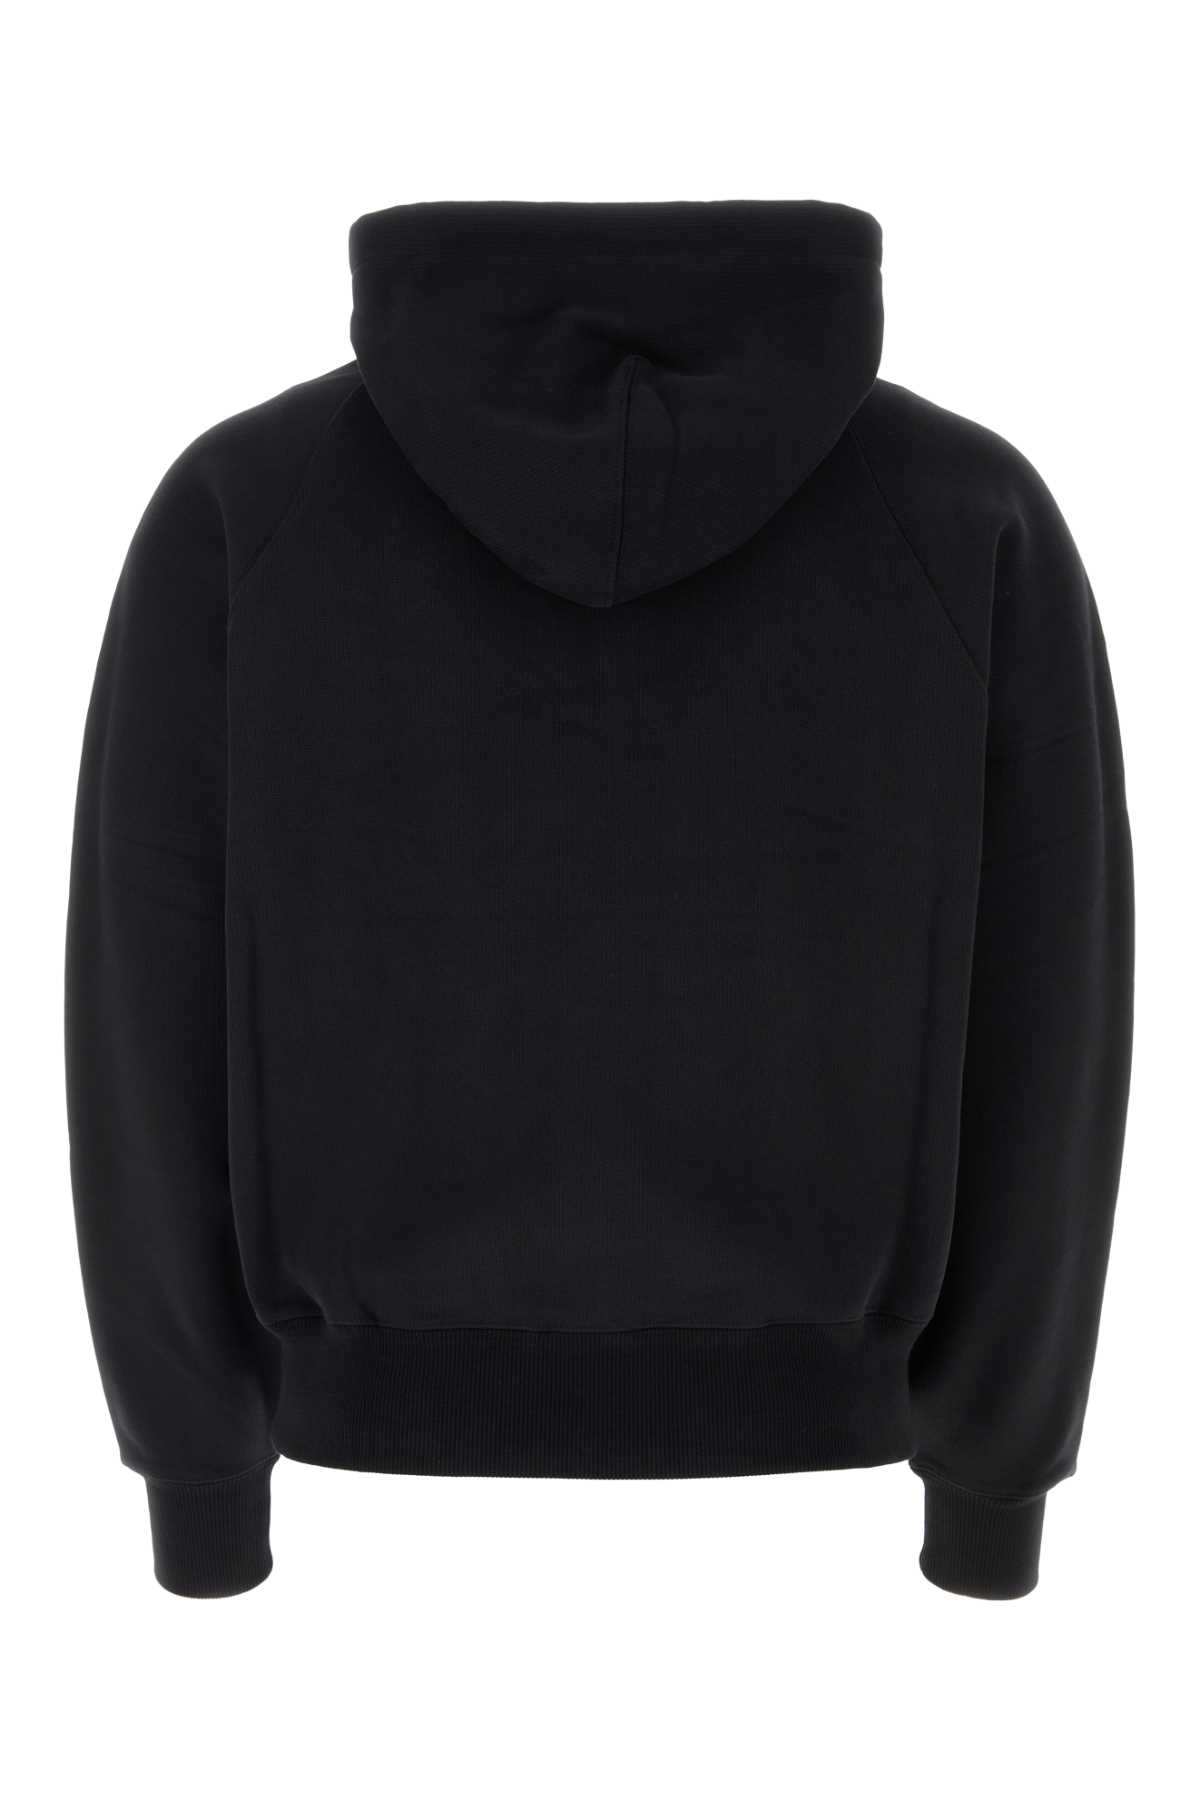 Shop Ami Alexandre Mattiussi Black Stretch Cotton Sweatshirt